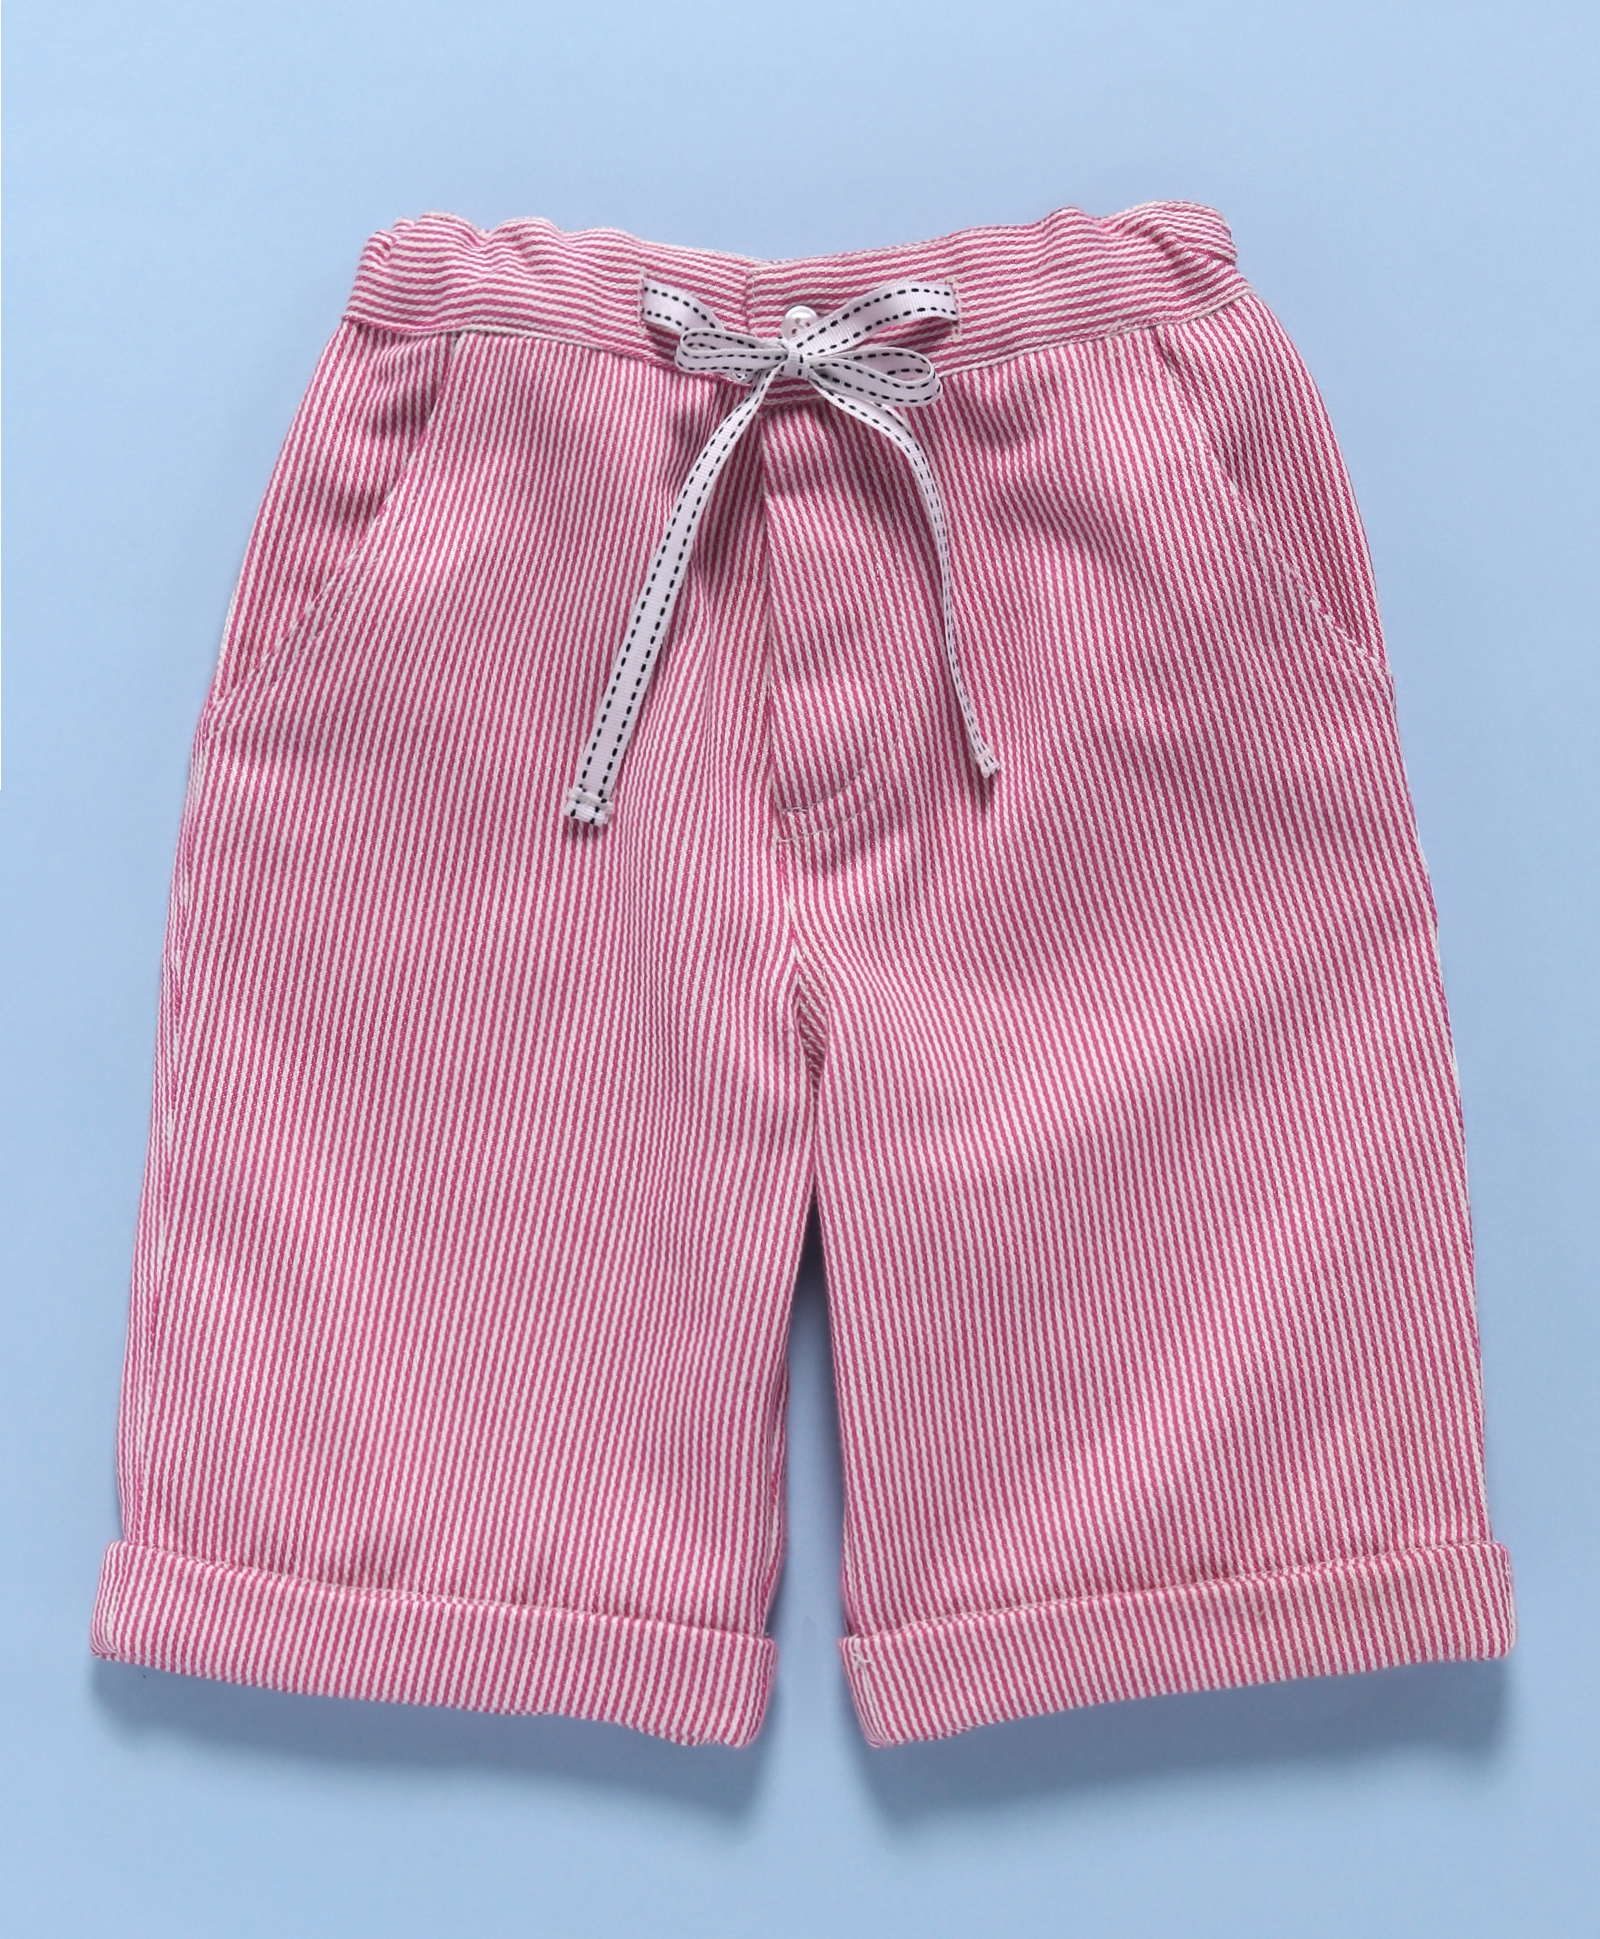 Popsicles Clothing | Popsicles Bubblegum Shorts Regular Fit For Boys